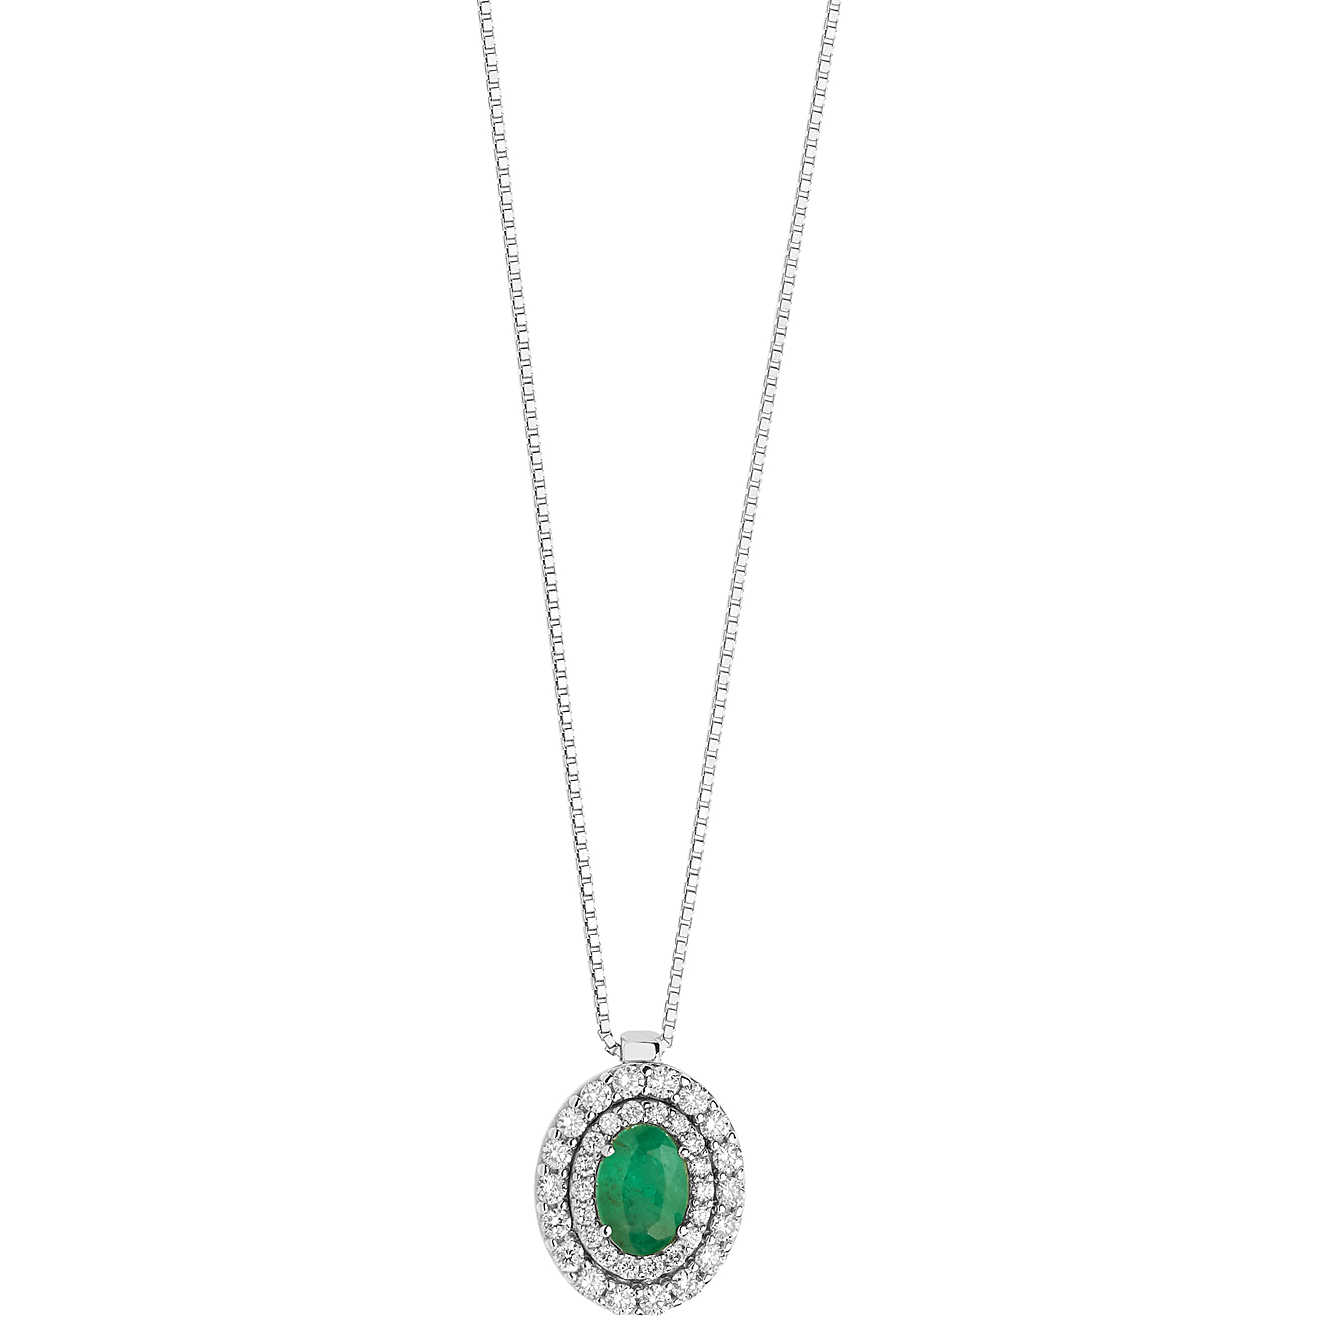 Orion GLB 1472 Women's Jewelry Necklace